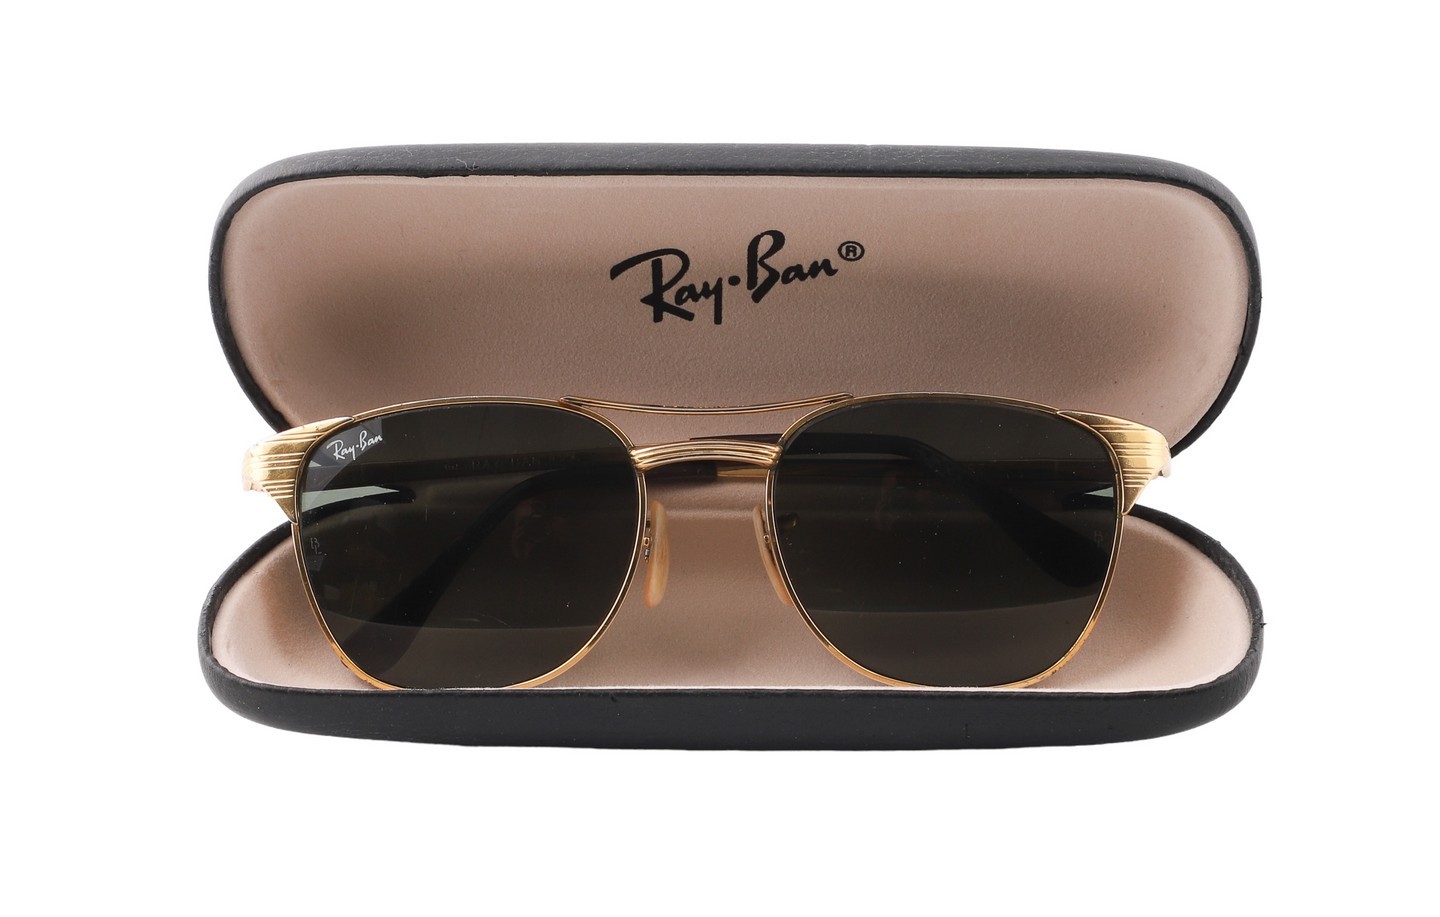 Vintage Signet B L Ray Ban sunglasses  27a698